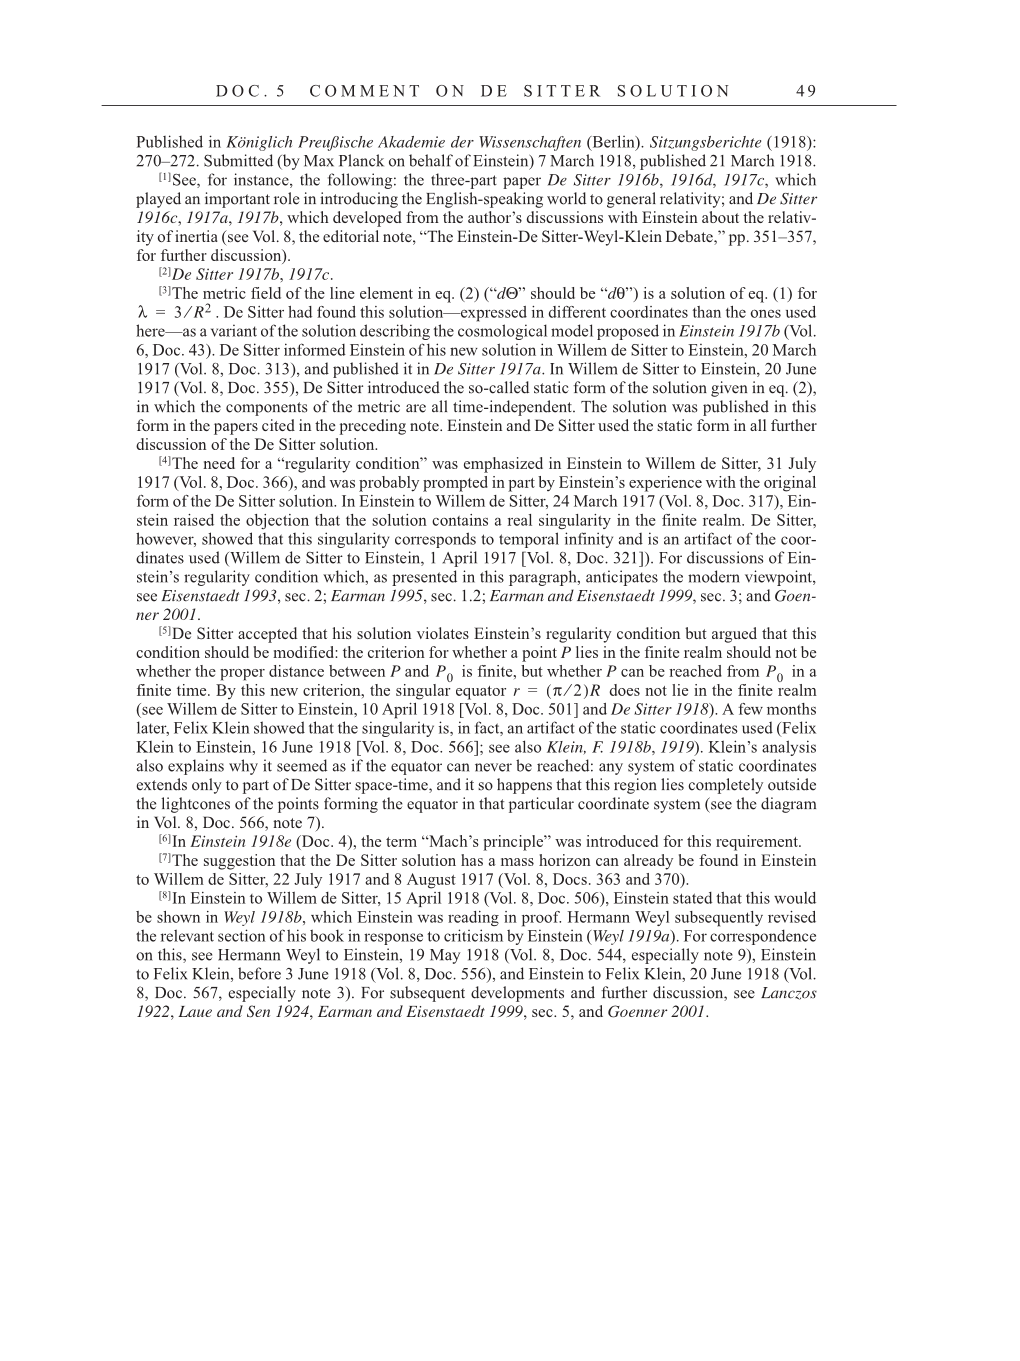 Volume 7: The Berlin Years: Writings, 1918-1921 page 49